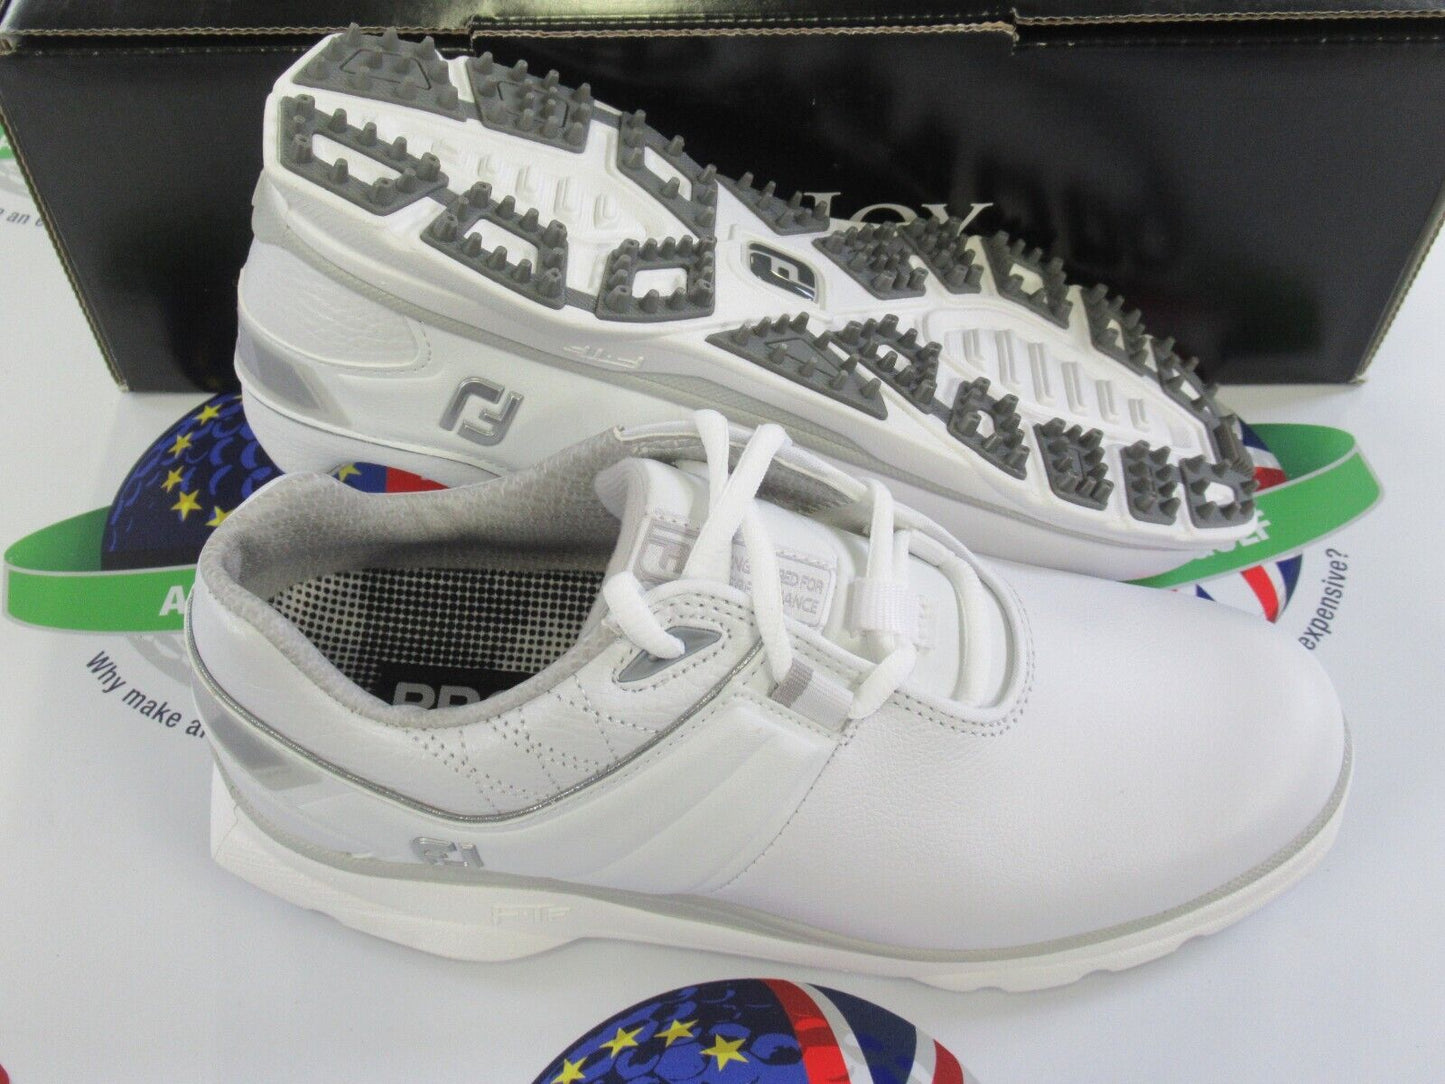 footjoy pro sl womens golf shoes white/silver uk size 4 medium